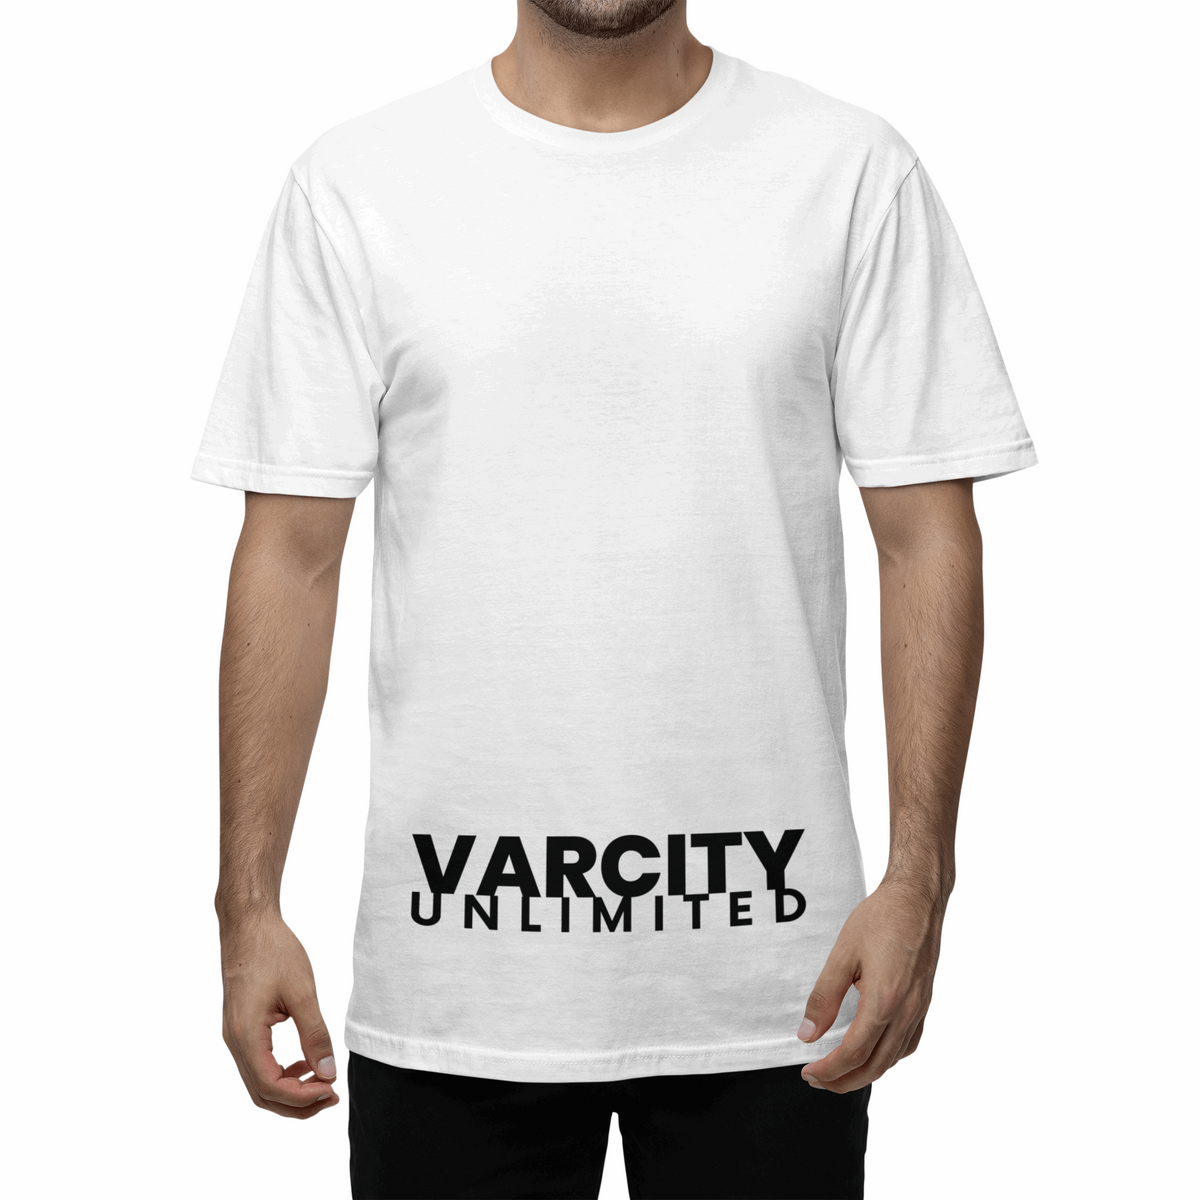 Varcity Unlimited Premium Statement T Shirt White